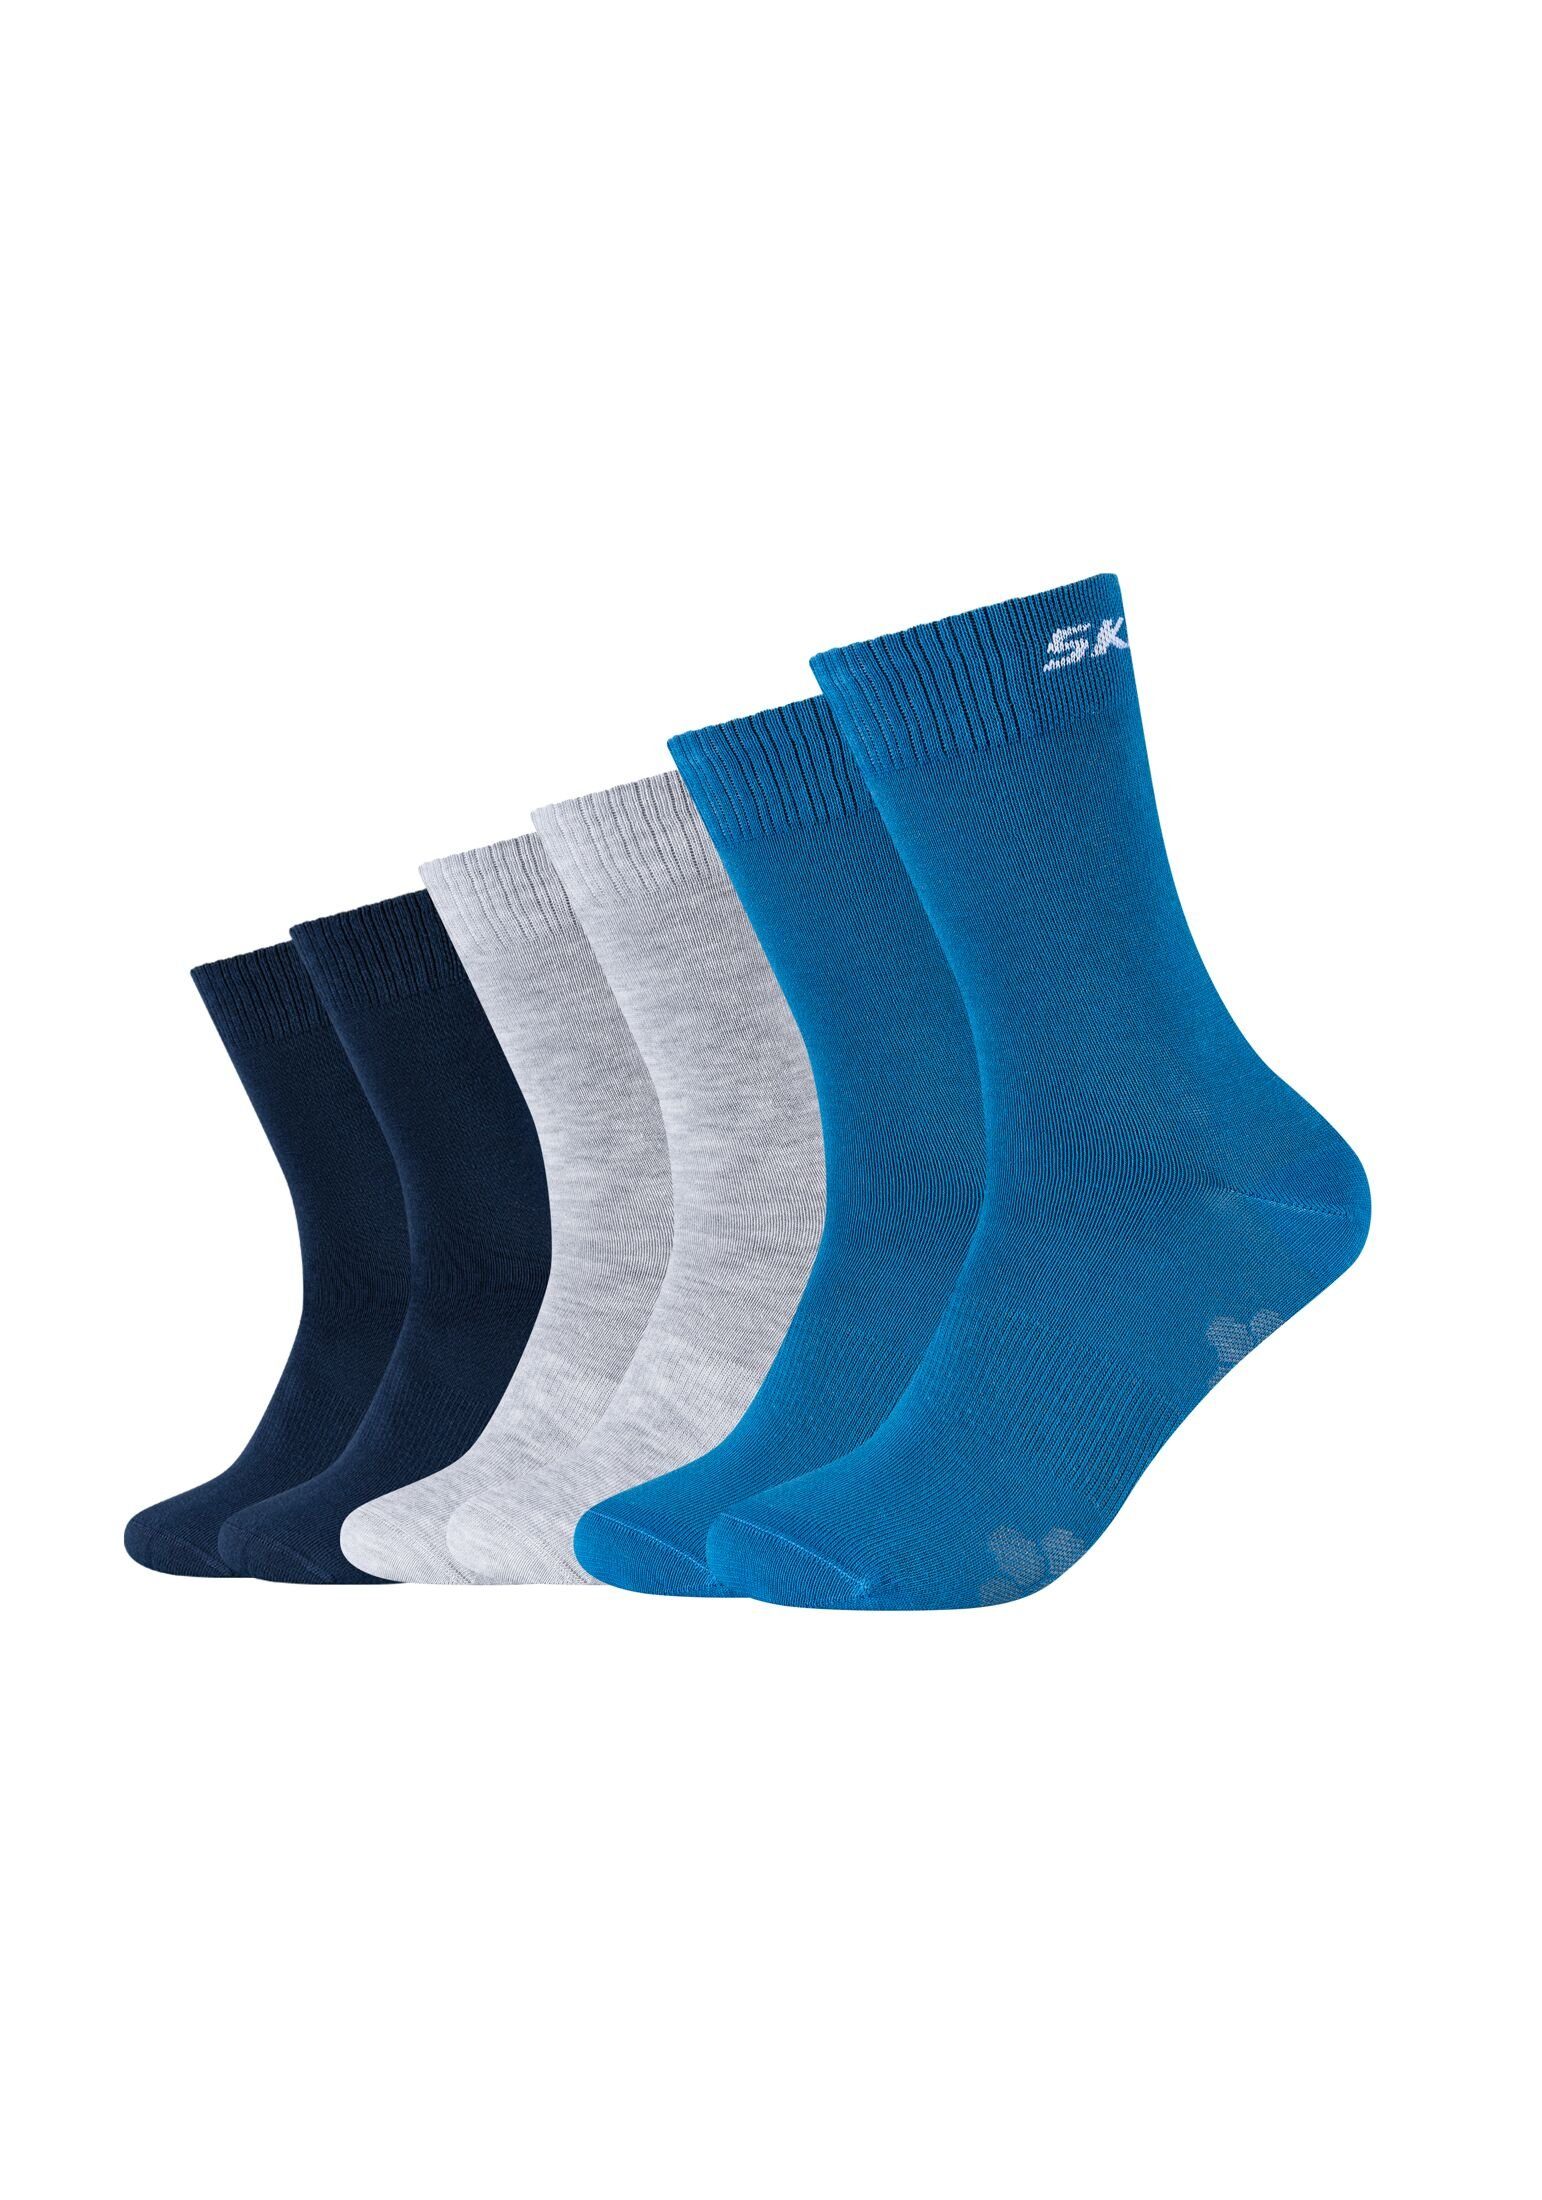 Besondere Funktion Skechers Socken blue vallarta Pack 6er Socken